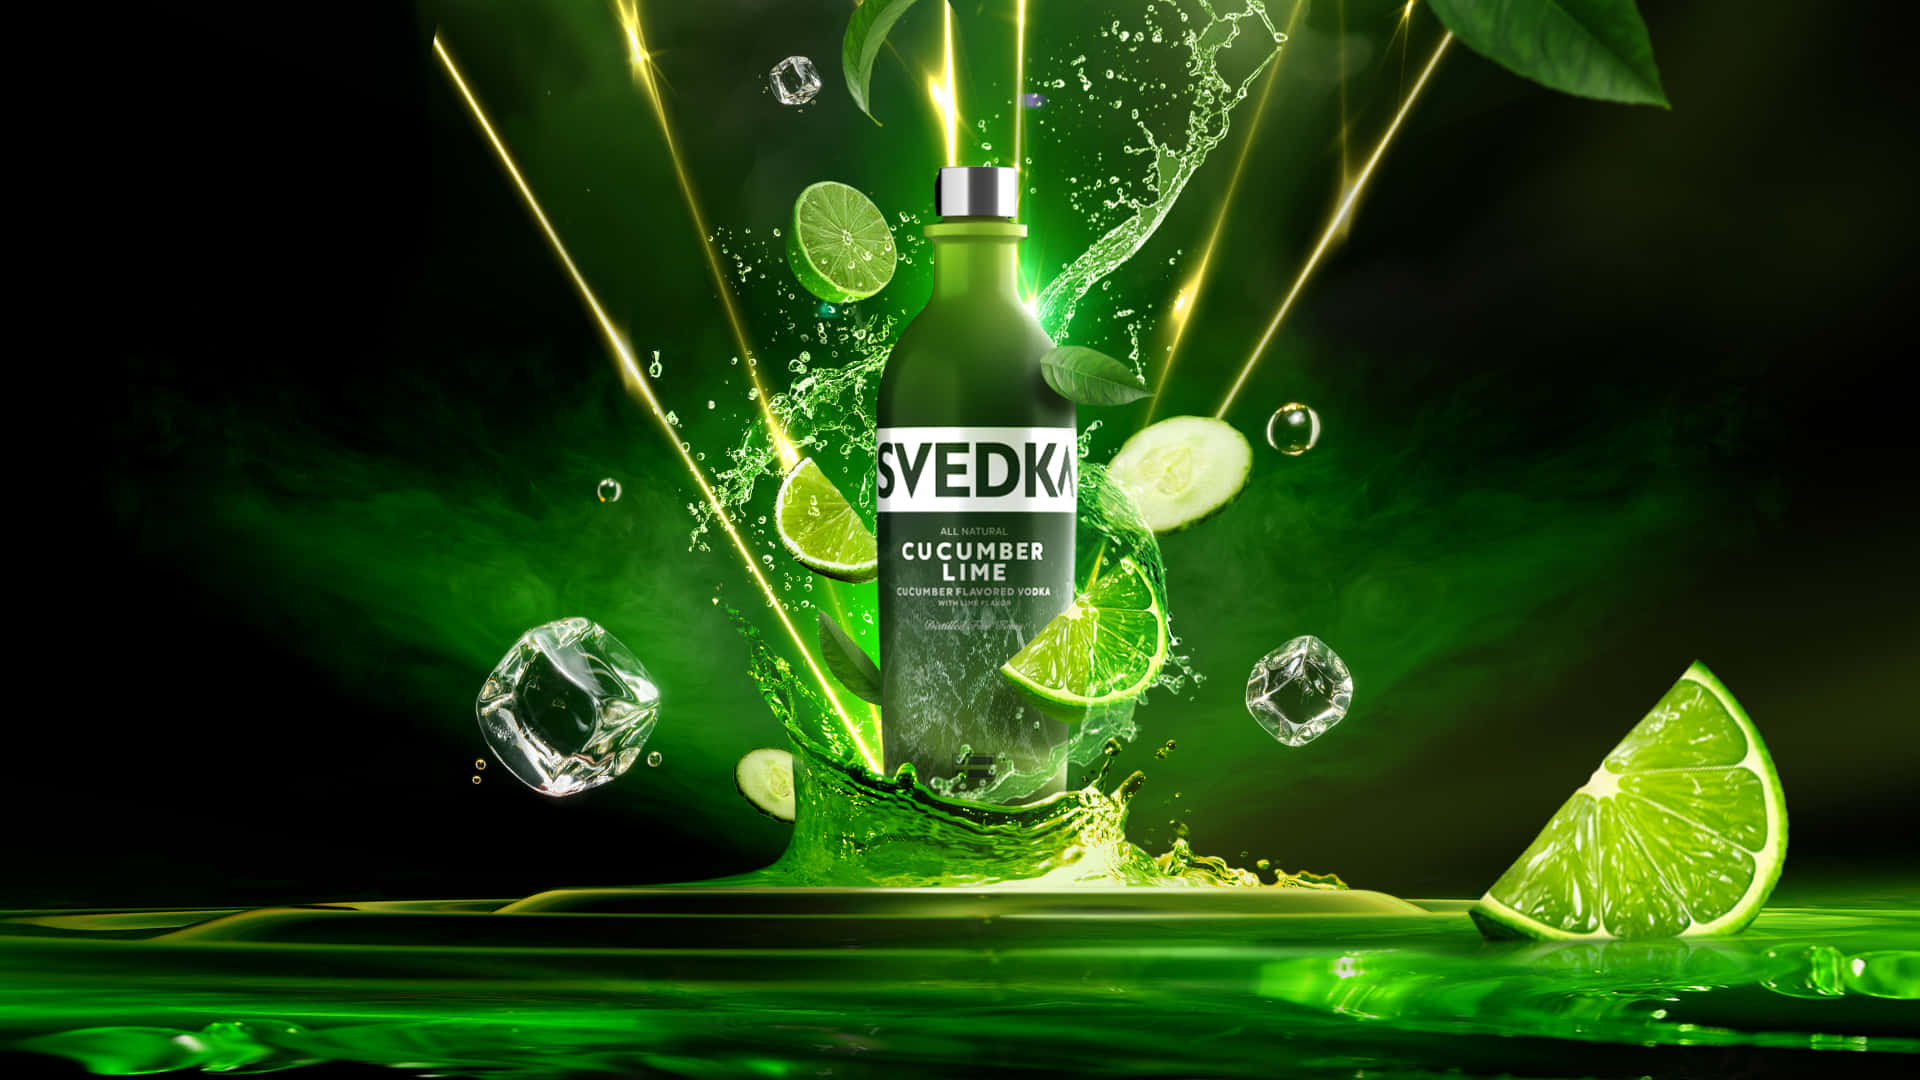 Refreshing Svedka Cucumber Lime Flavored Vodka Wallpaper